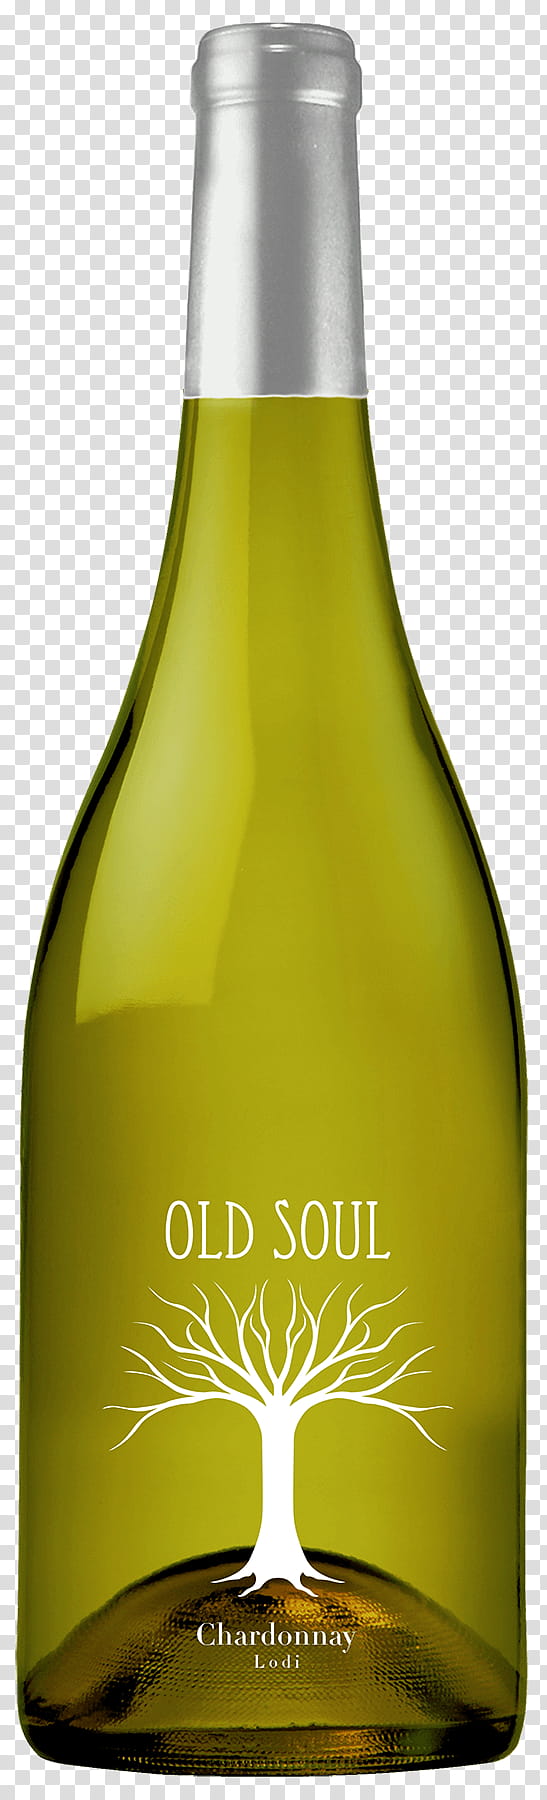 Champagne Bottle, White Wine, Zinfandel, Chardonnay, Liqueur, Russian River Valley AVA, Oak Ridge Winery, Common Grape Vine transparent background PNG clipart